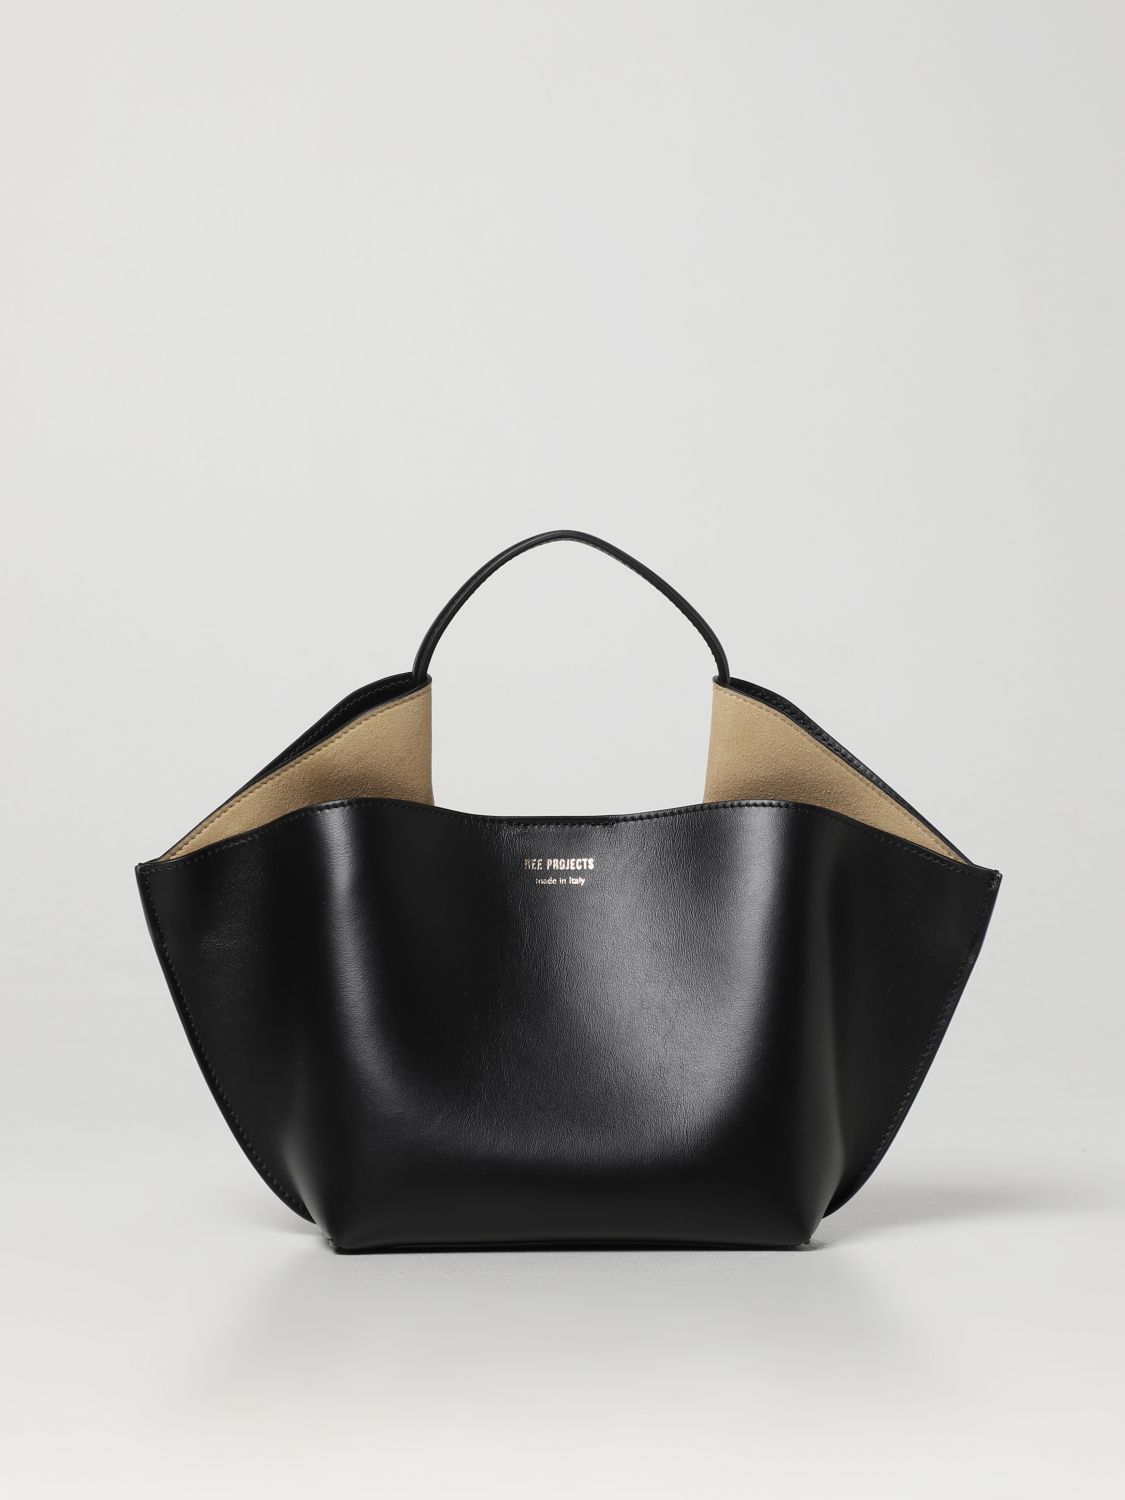 REE PROJECTS: handbag for woman - Black | Ree Projects handbag